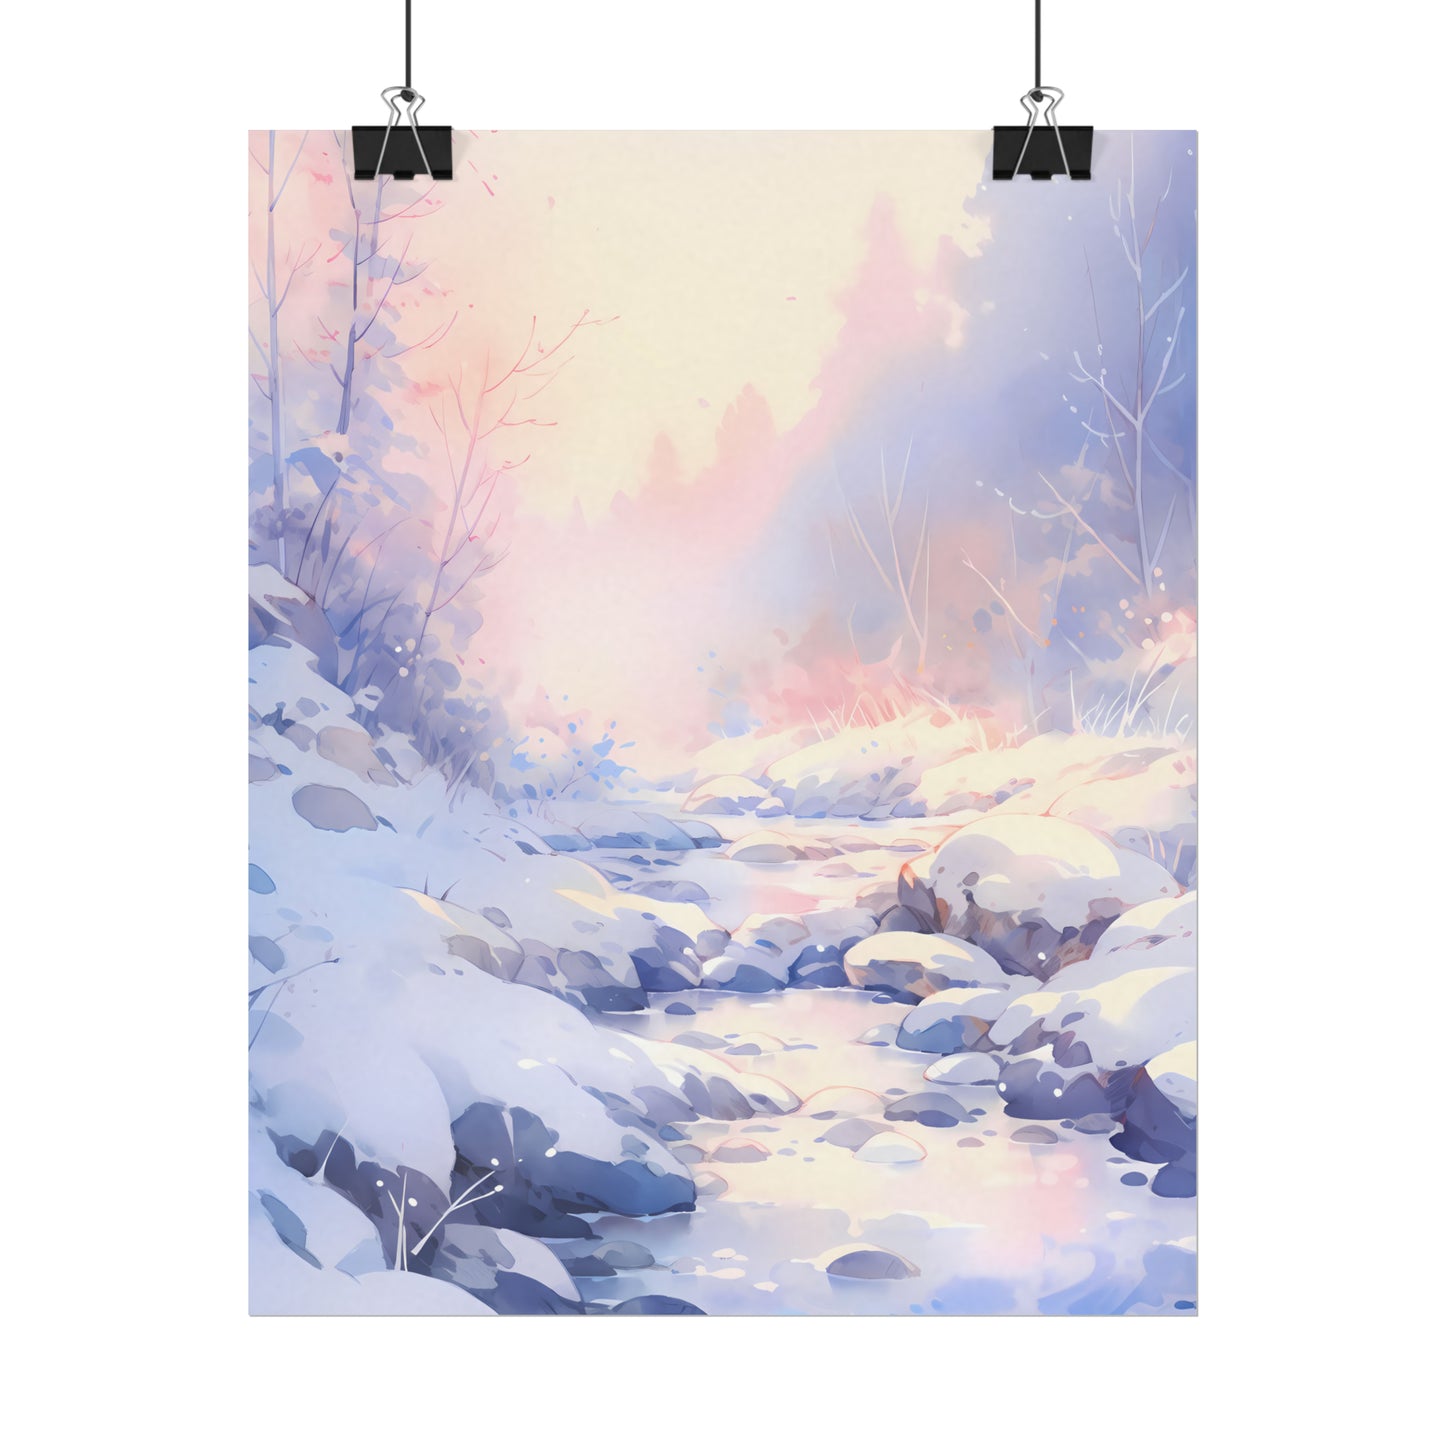 Silent Snowscape - Winter Anime Watercolor Poster